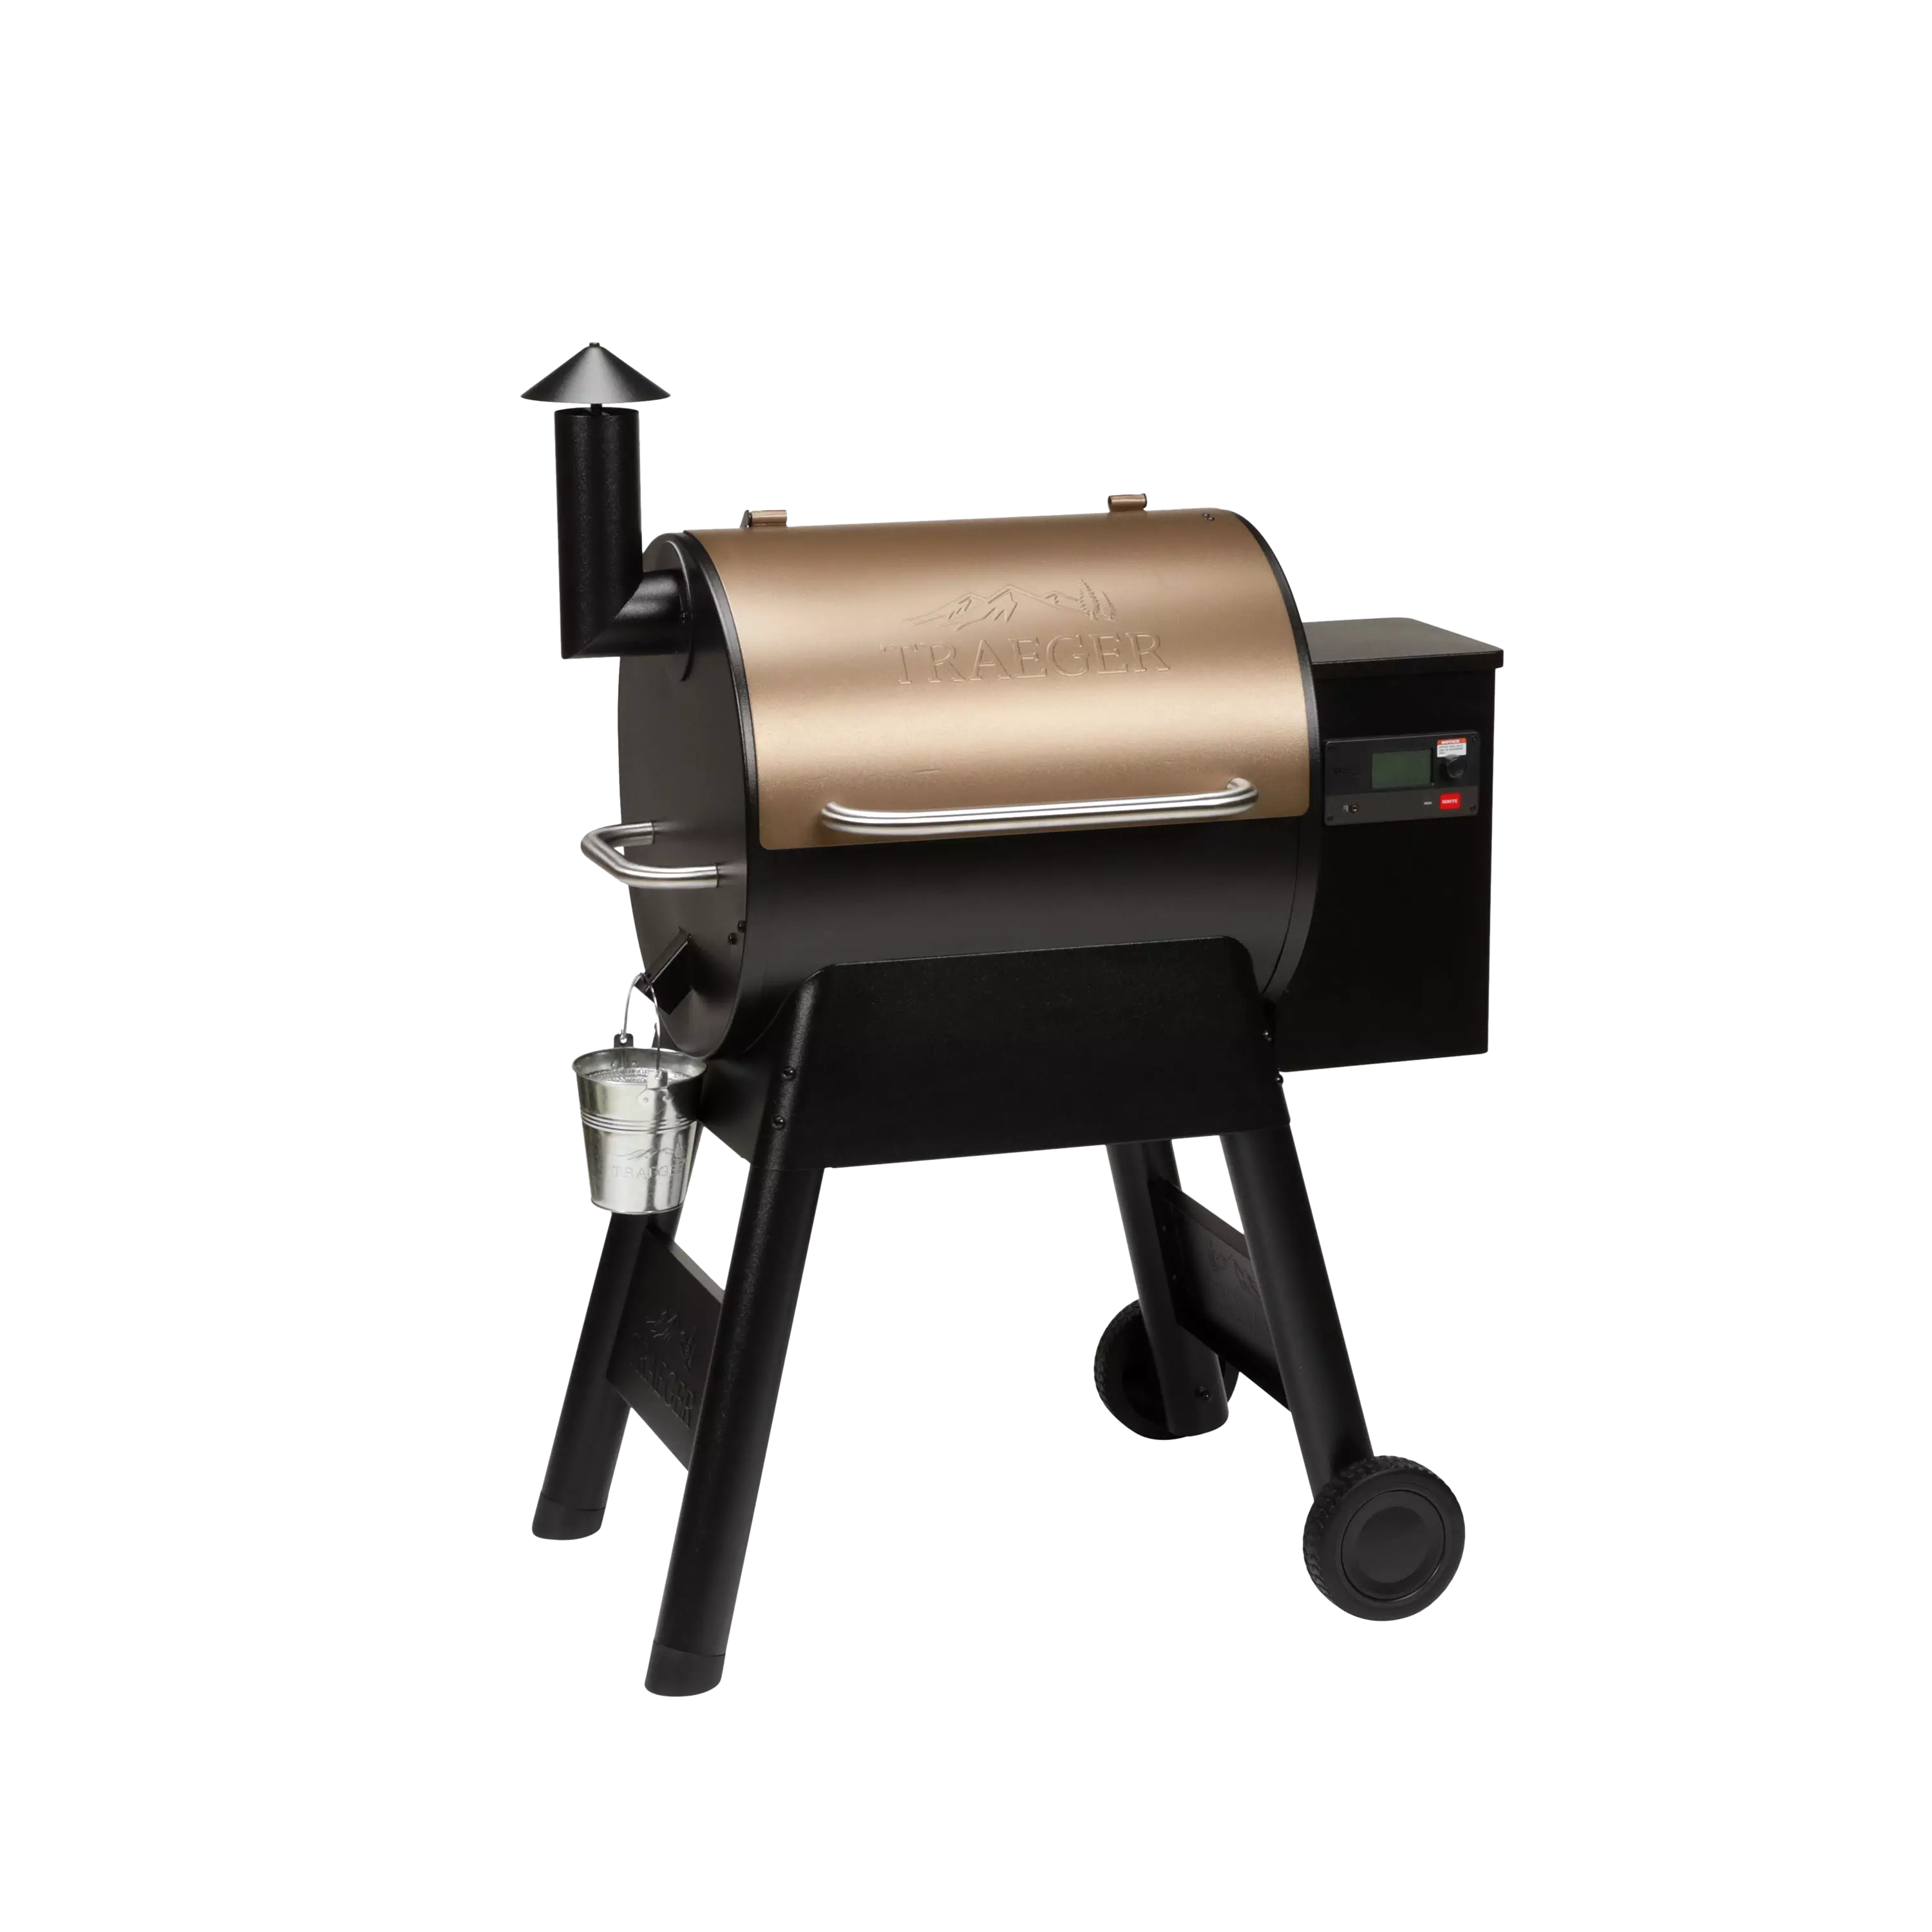 Traeger Pro 575 Smart Pellet Grill/Smoker in Bronze